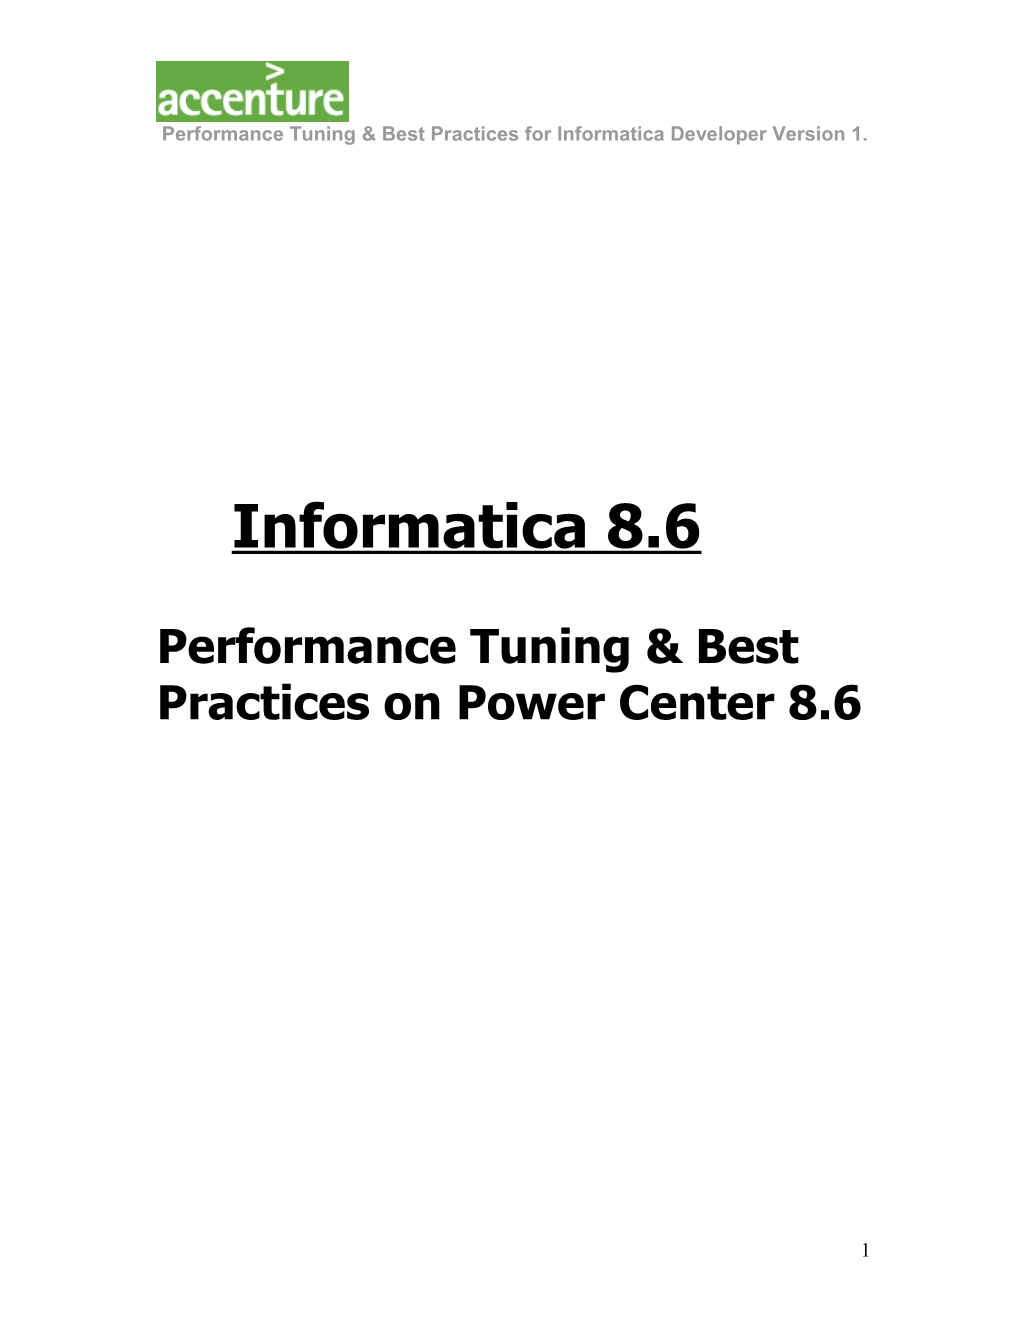 Performance Tuning & Best On Informatica Power Center 8